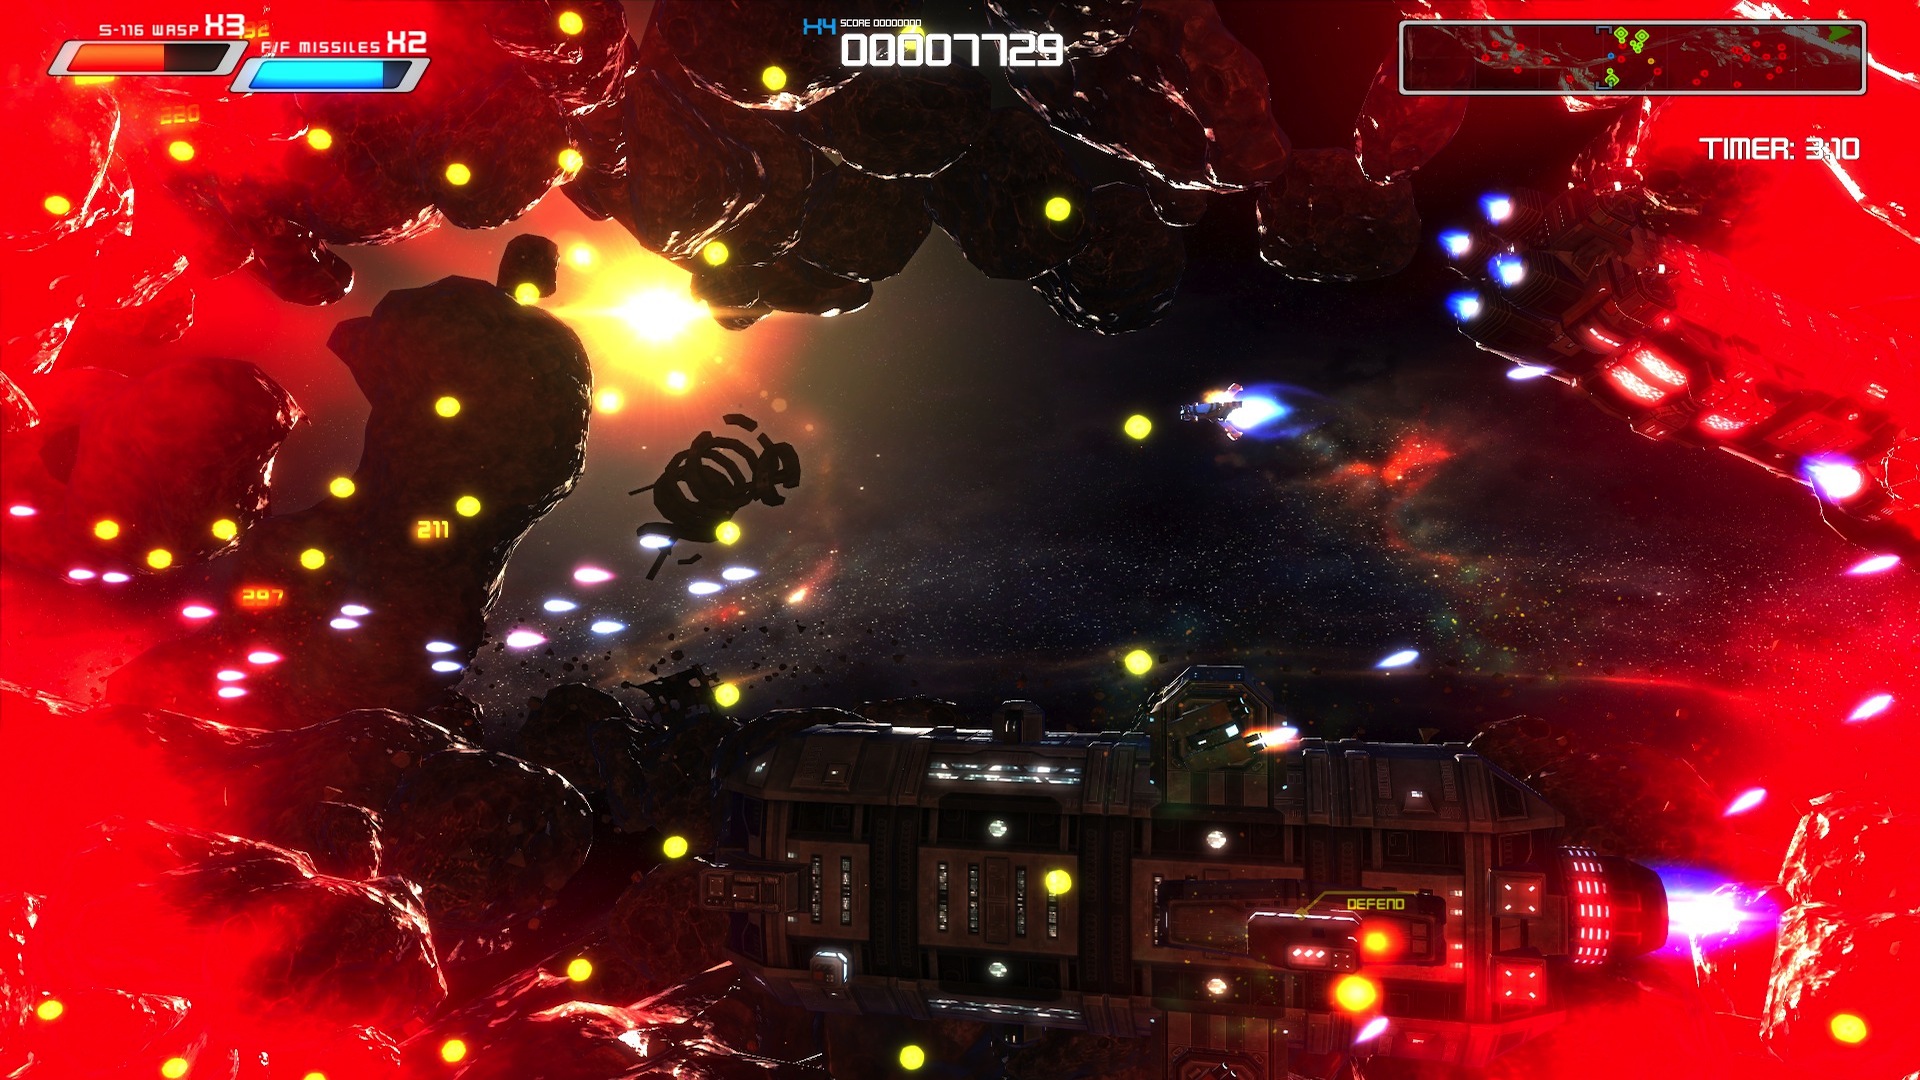 Syder Arcade screenshot